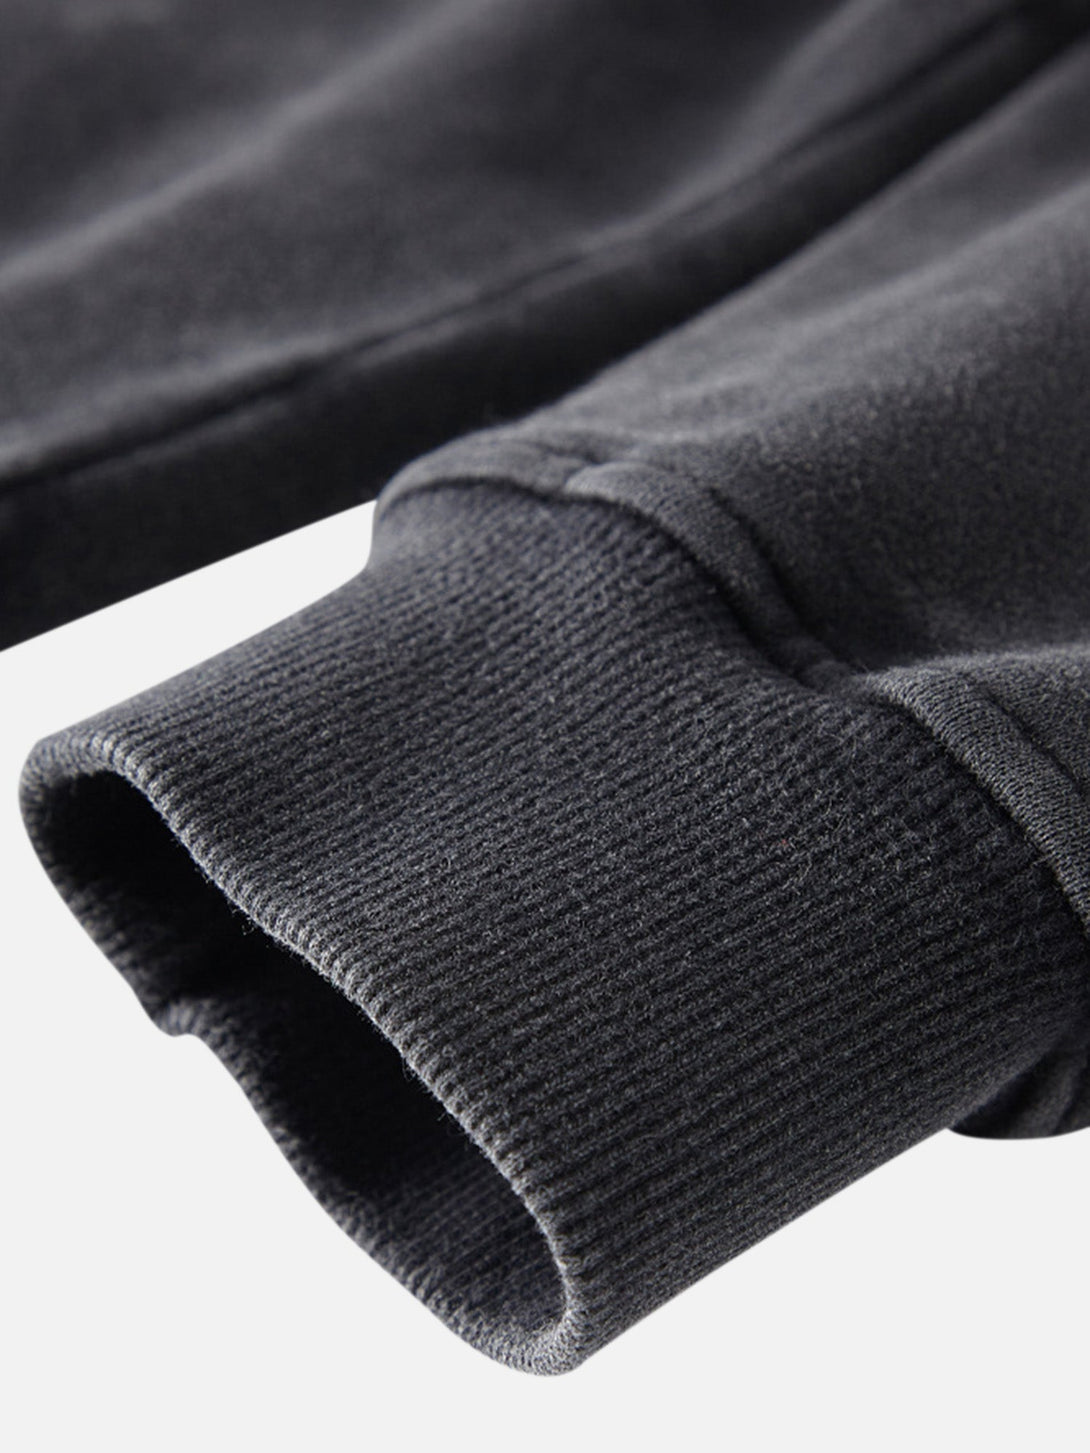 Majesda® - Batik Distressed Loose Round Neck Sweatshirt - 1898- Outfit Ideas - Streetwear Fashion - majesda.com